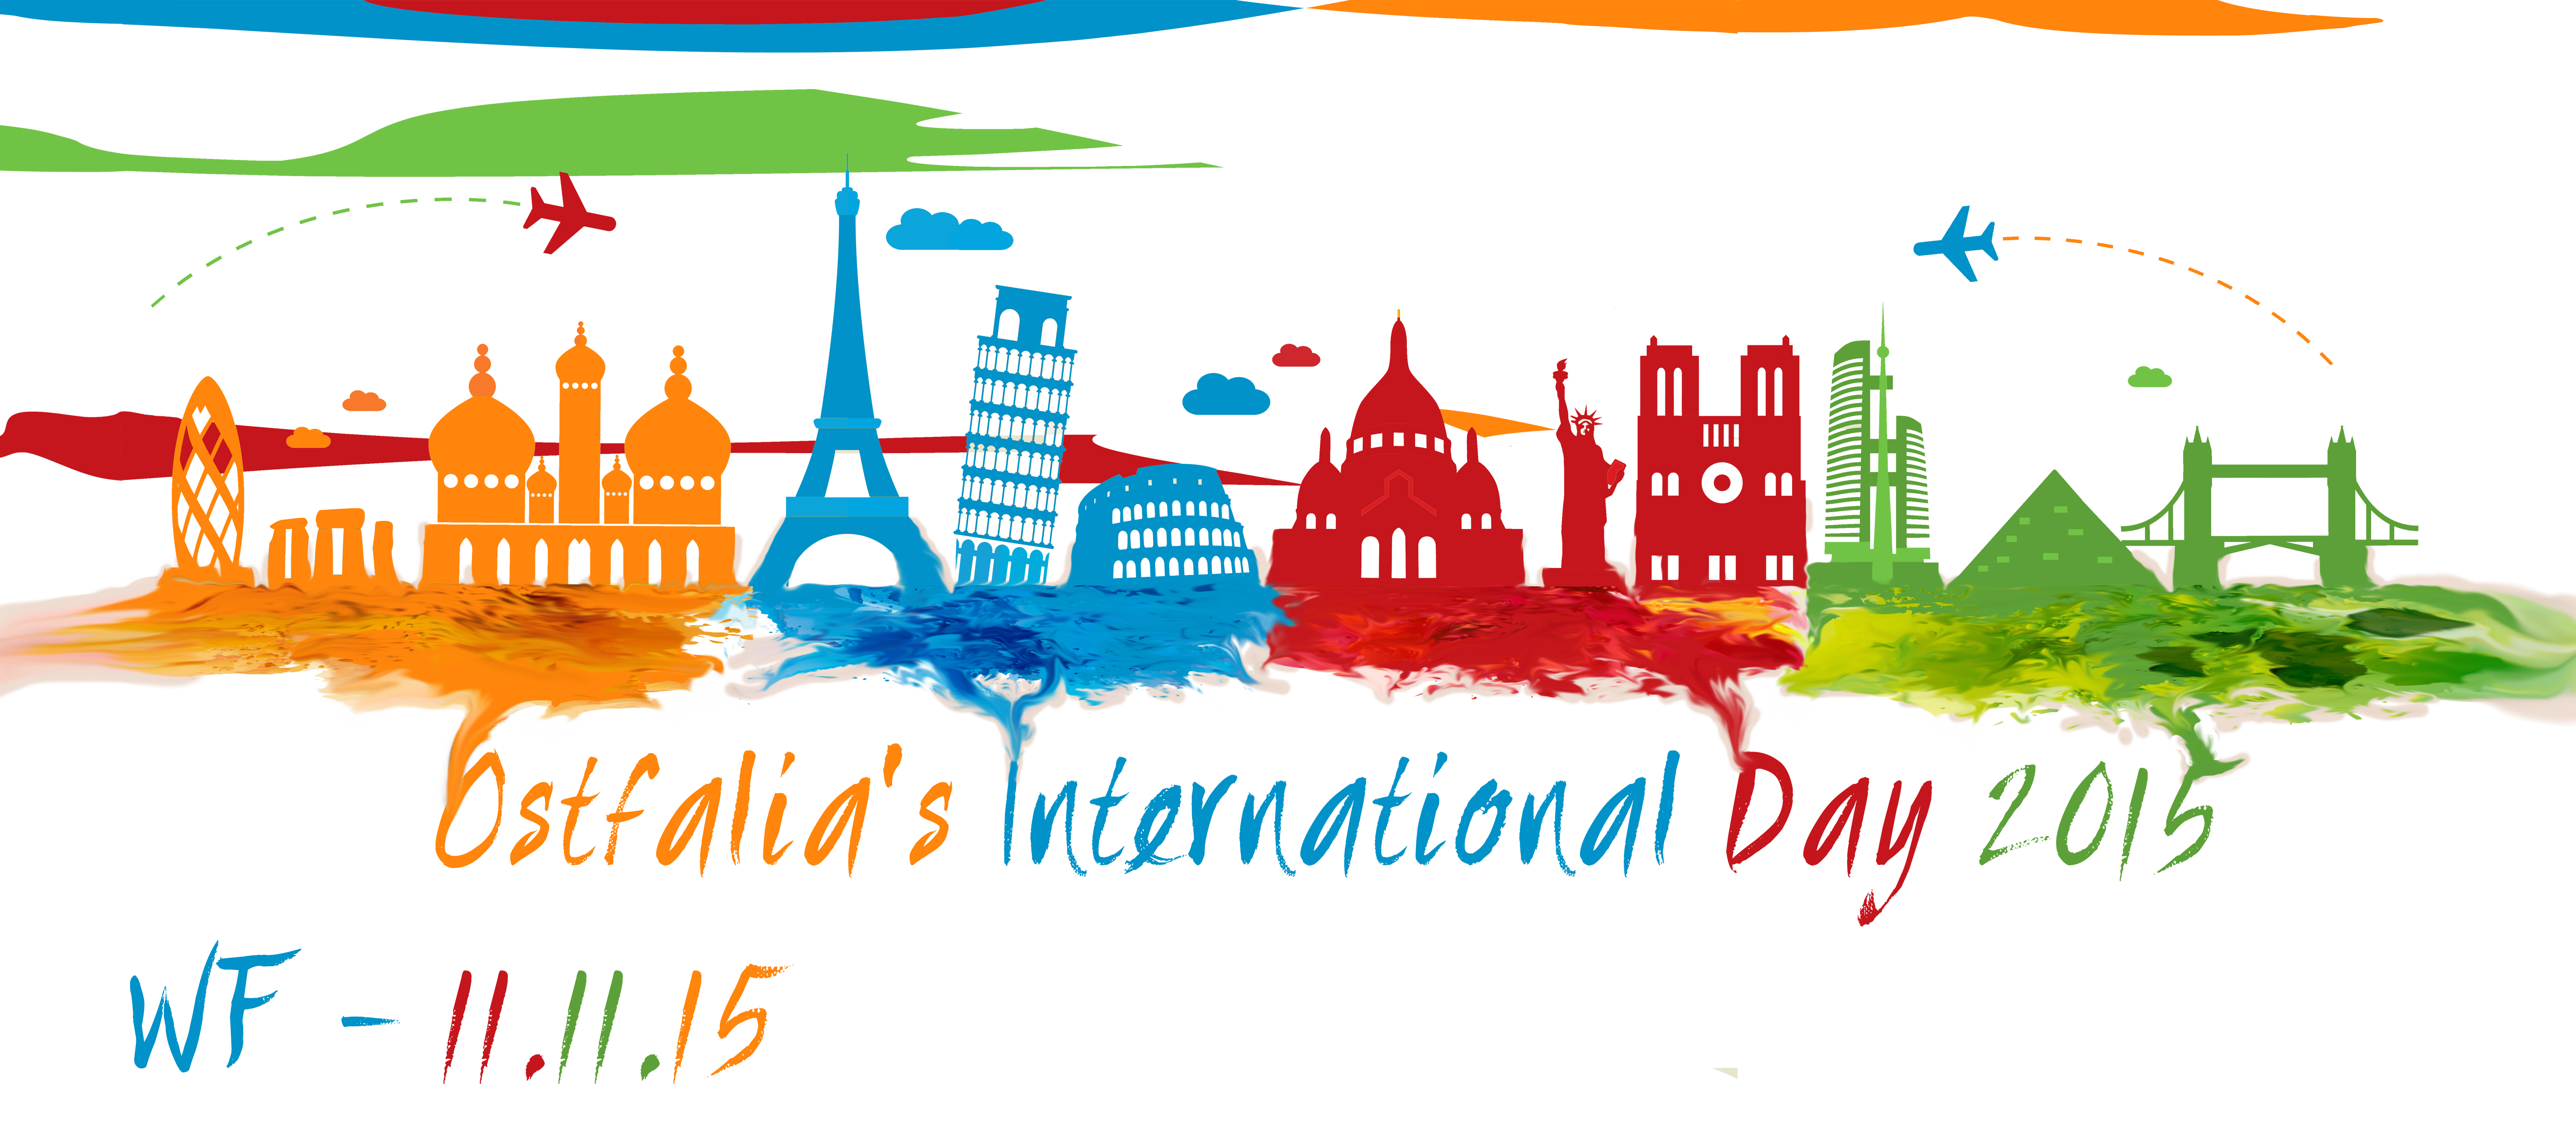 International Day 2015